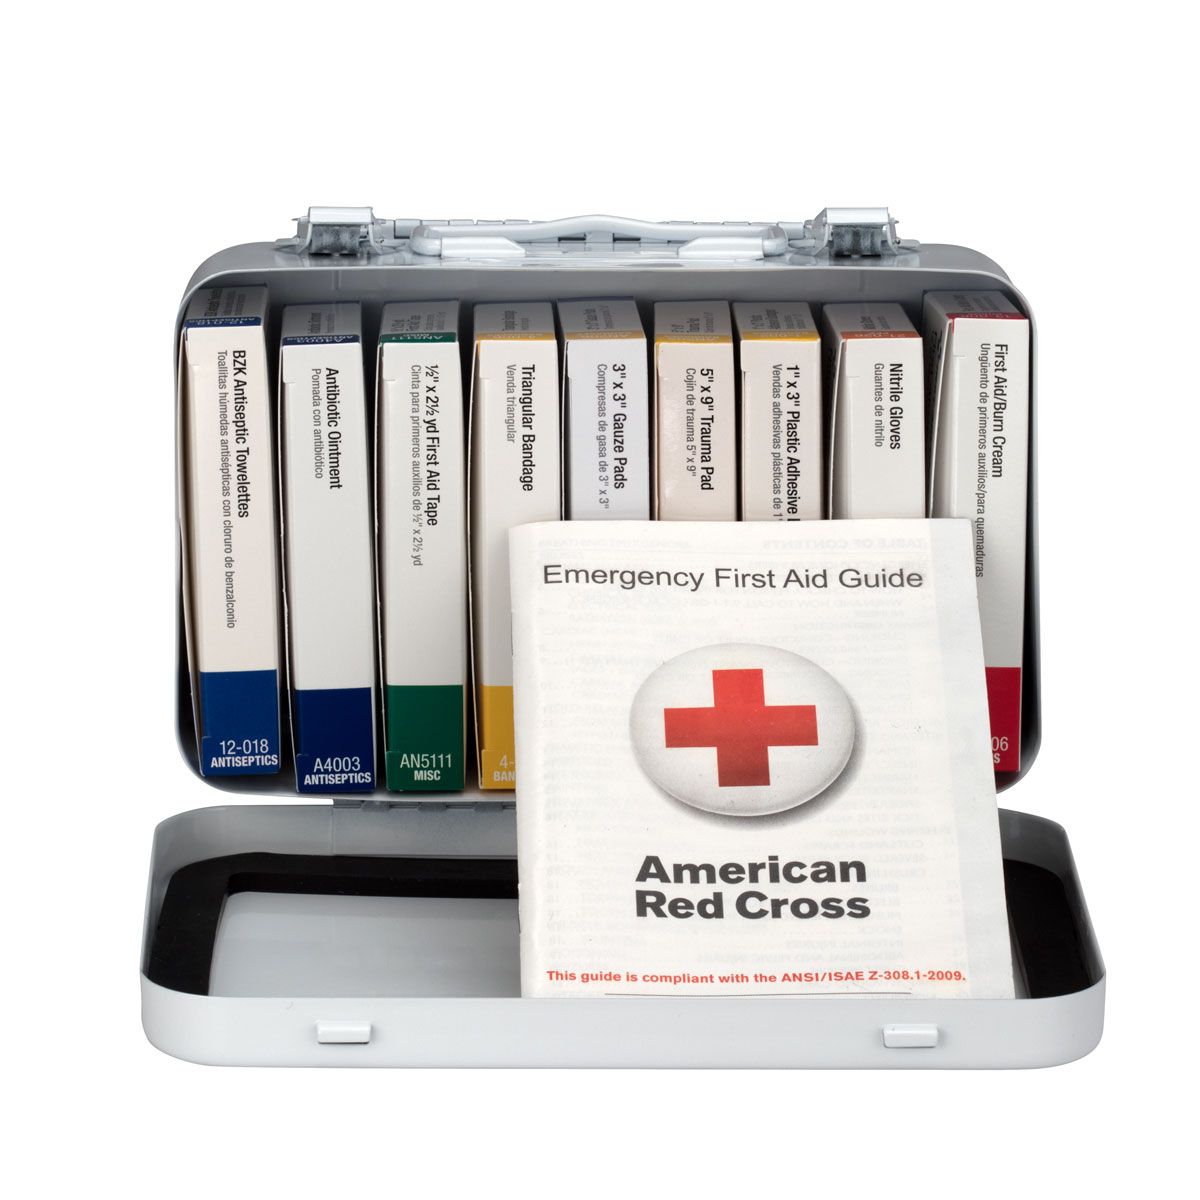 10 Unit First Aid Kit, Metal Case - W-240-AN